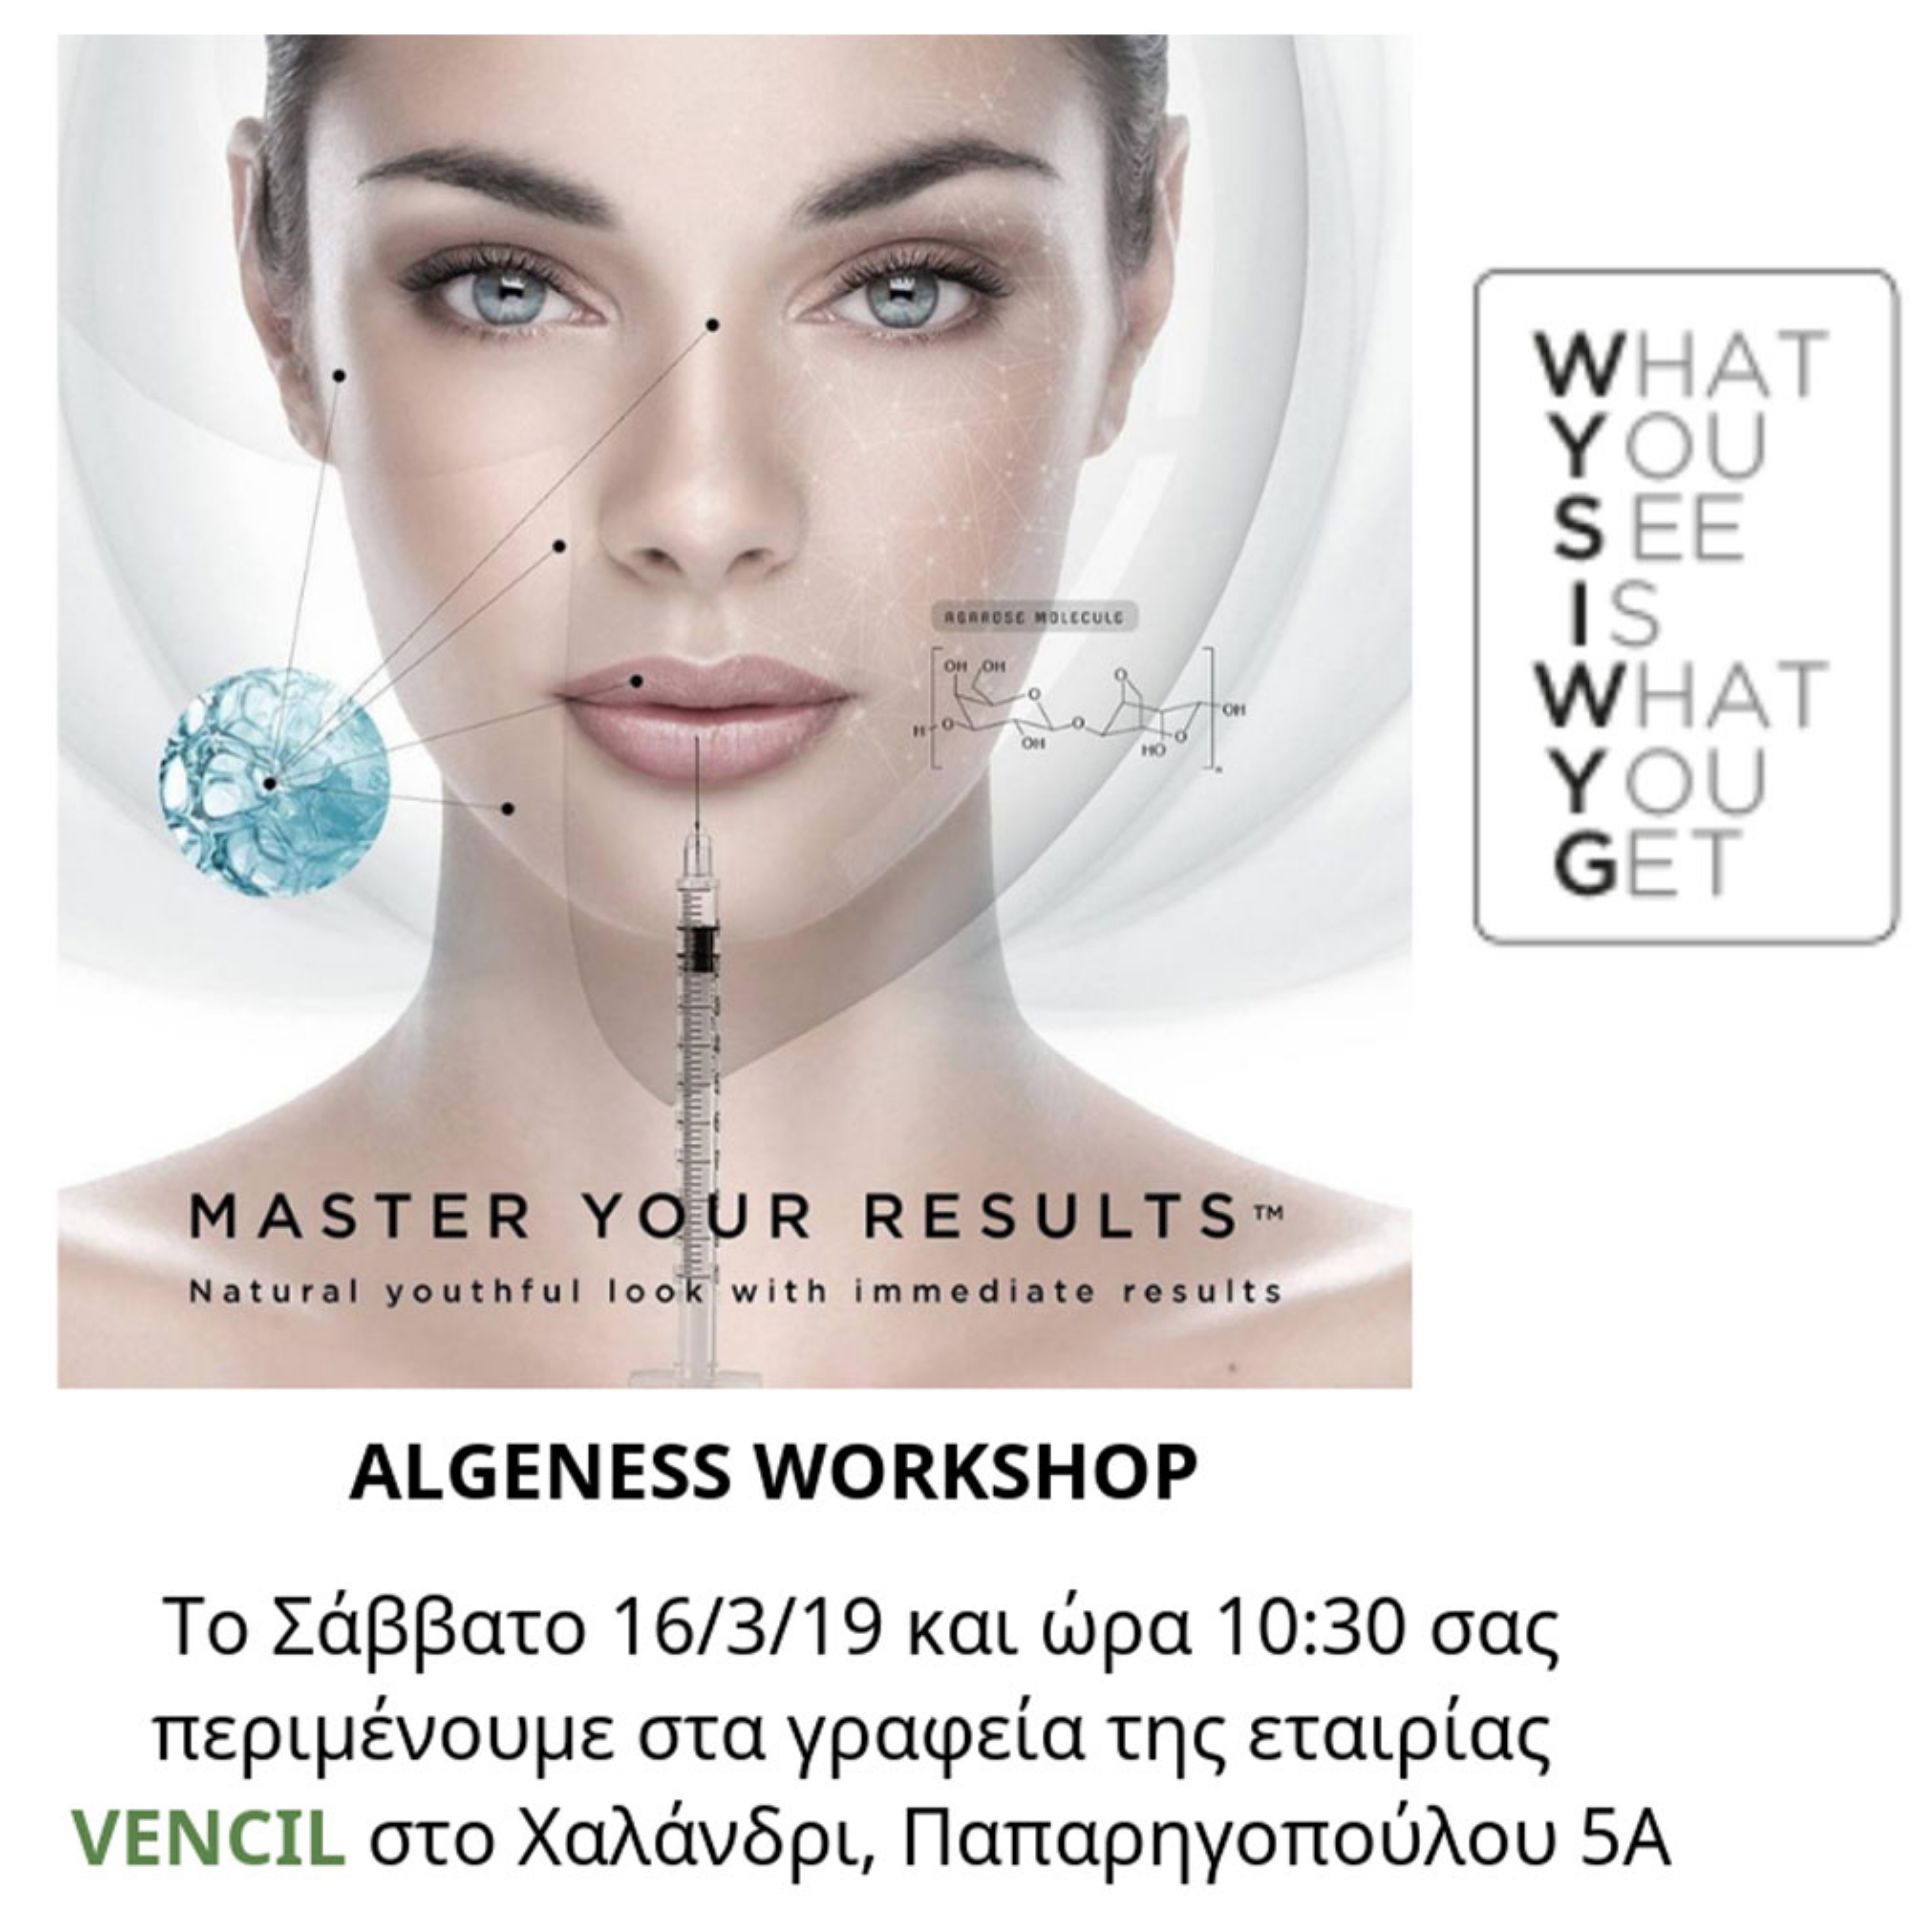 Algeness Workshop